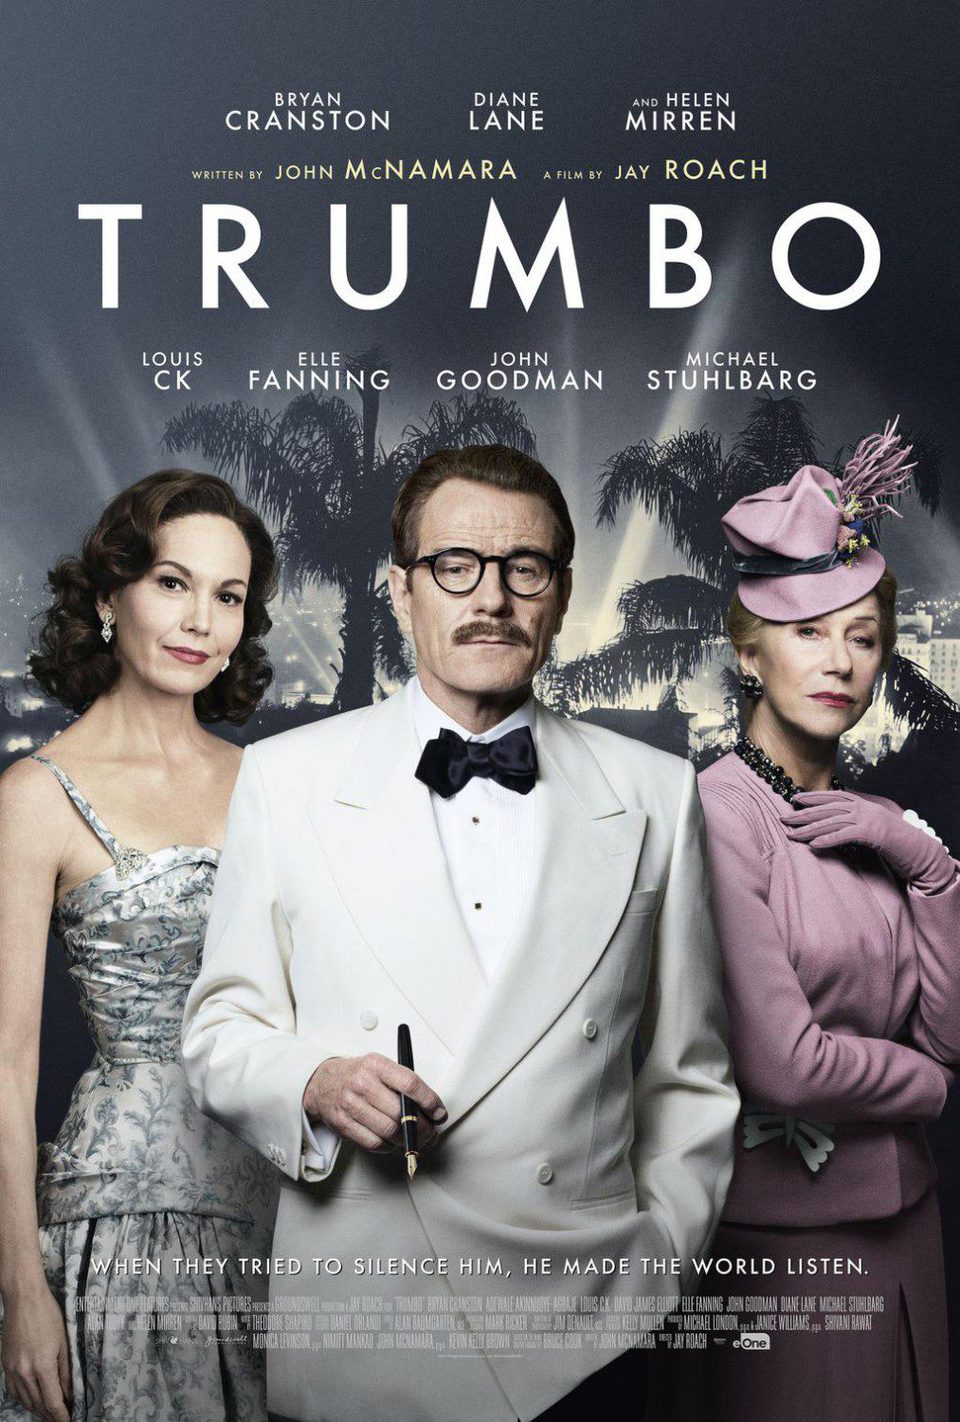 Cartel de Trumbo. La lista negra de Hollywood - Poster Trumbo